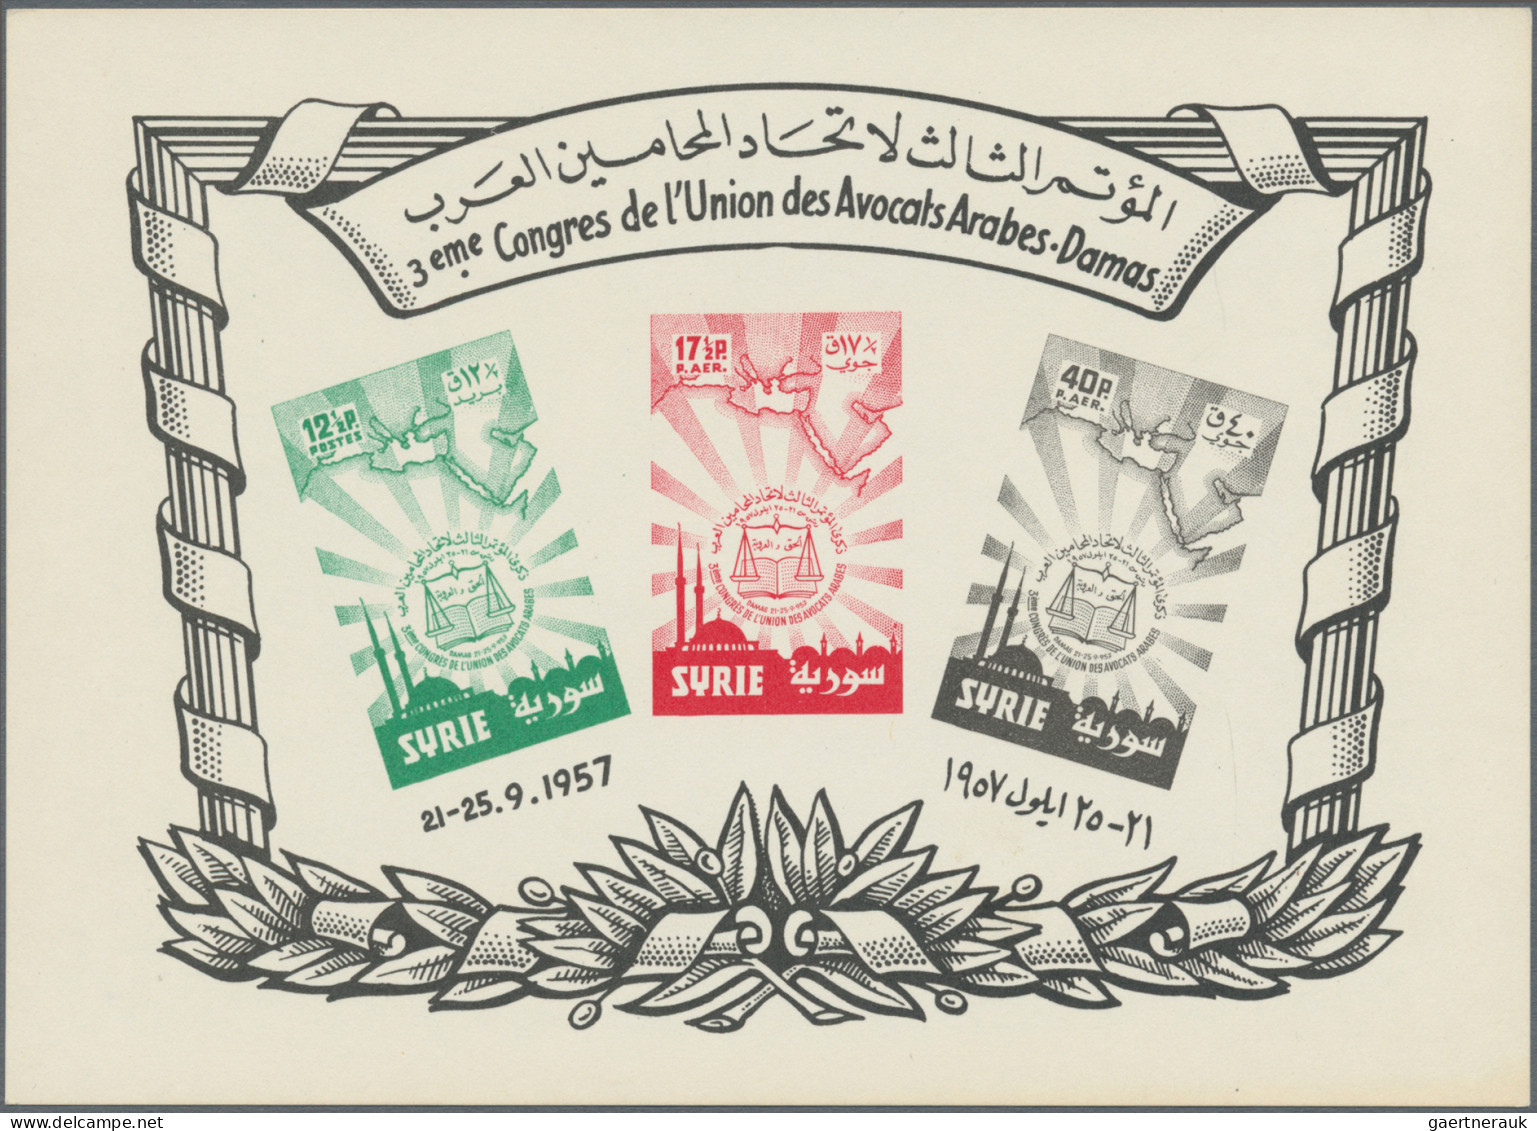 Syria: 1938/1957, a decent mint collection of 14 different souvenir sheets, MNH